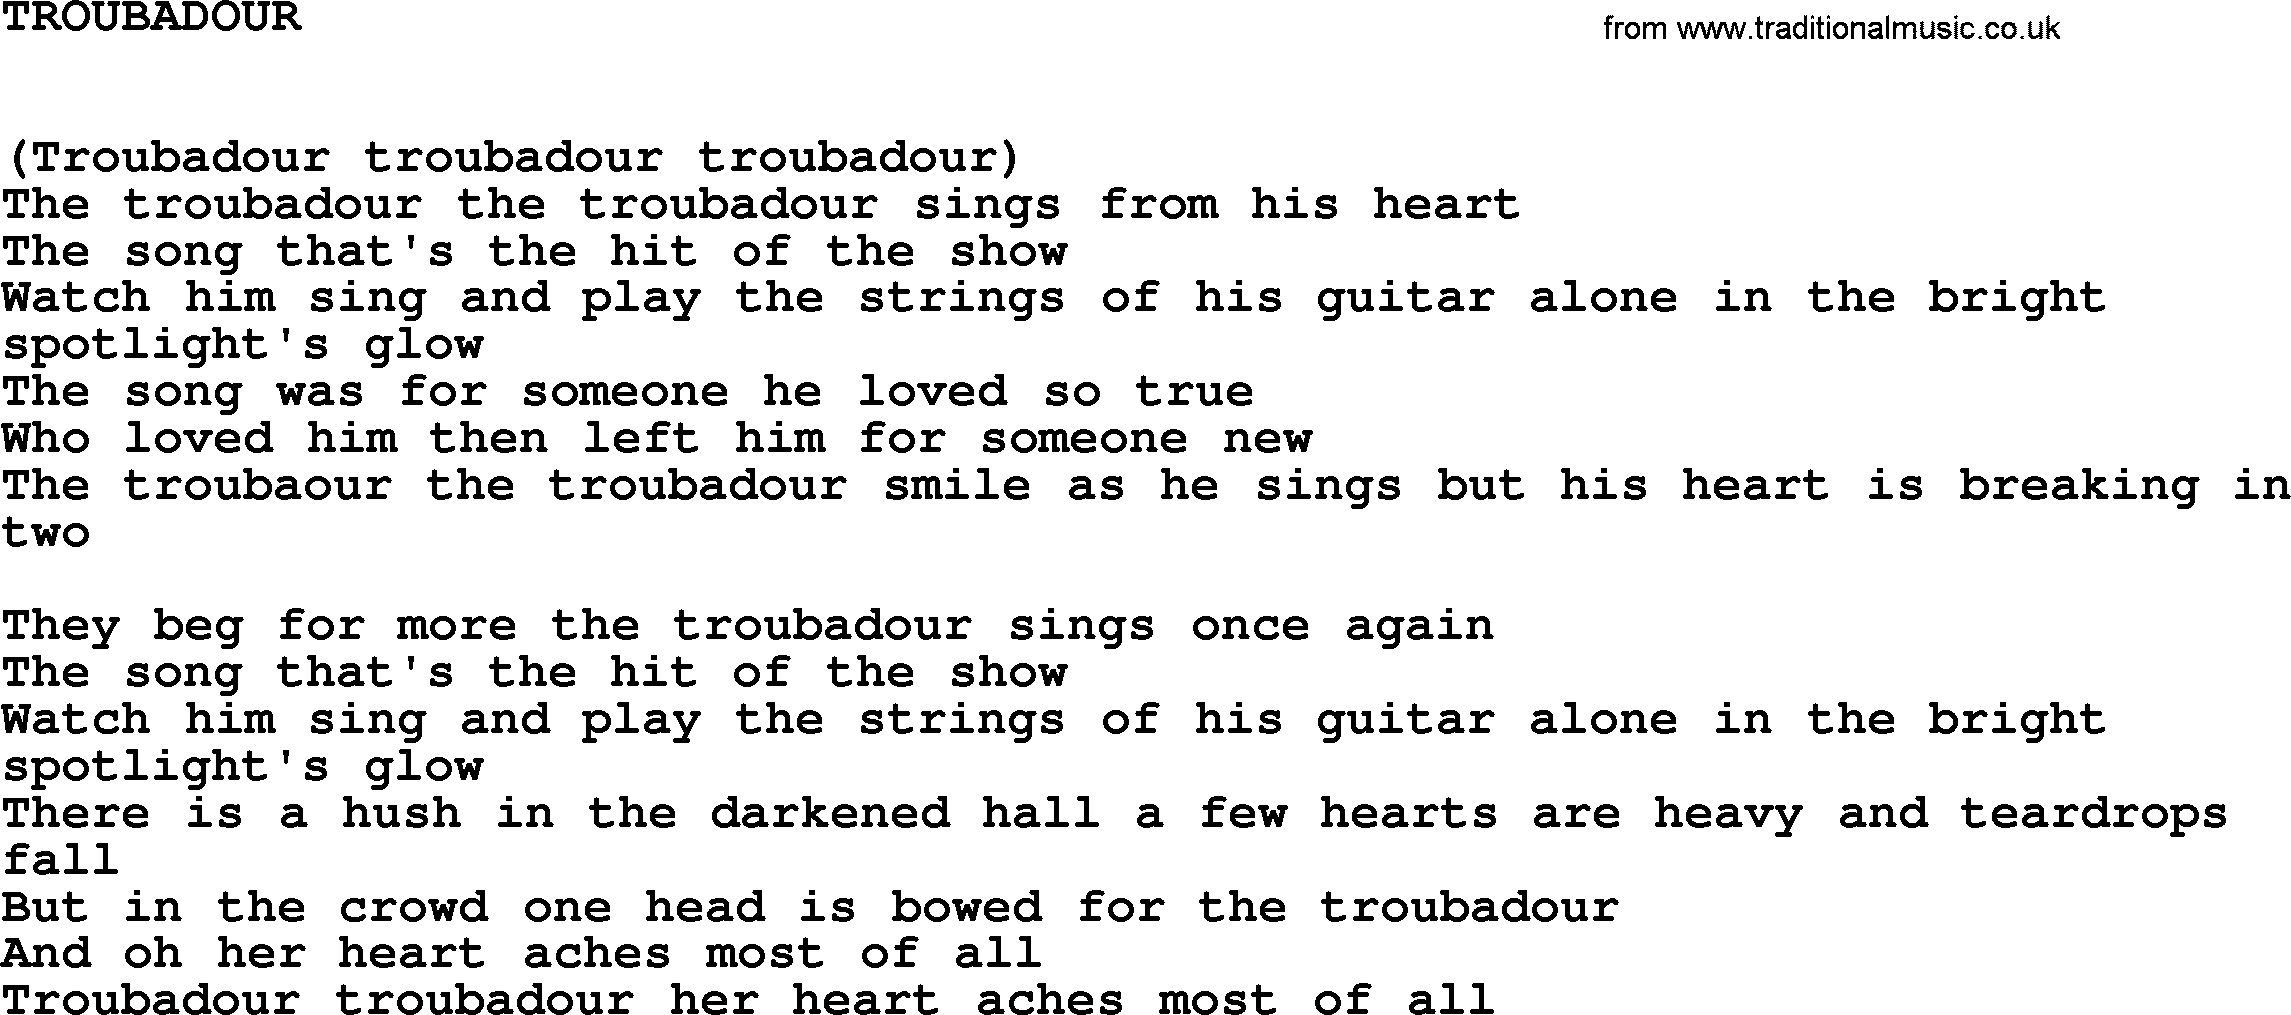 Johnny Cash song Troubadour.txt lyrics